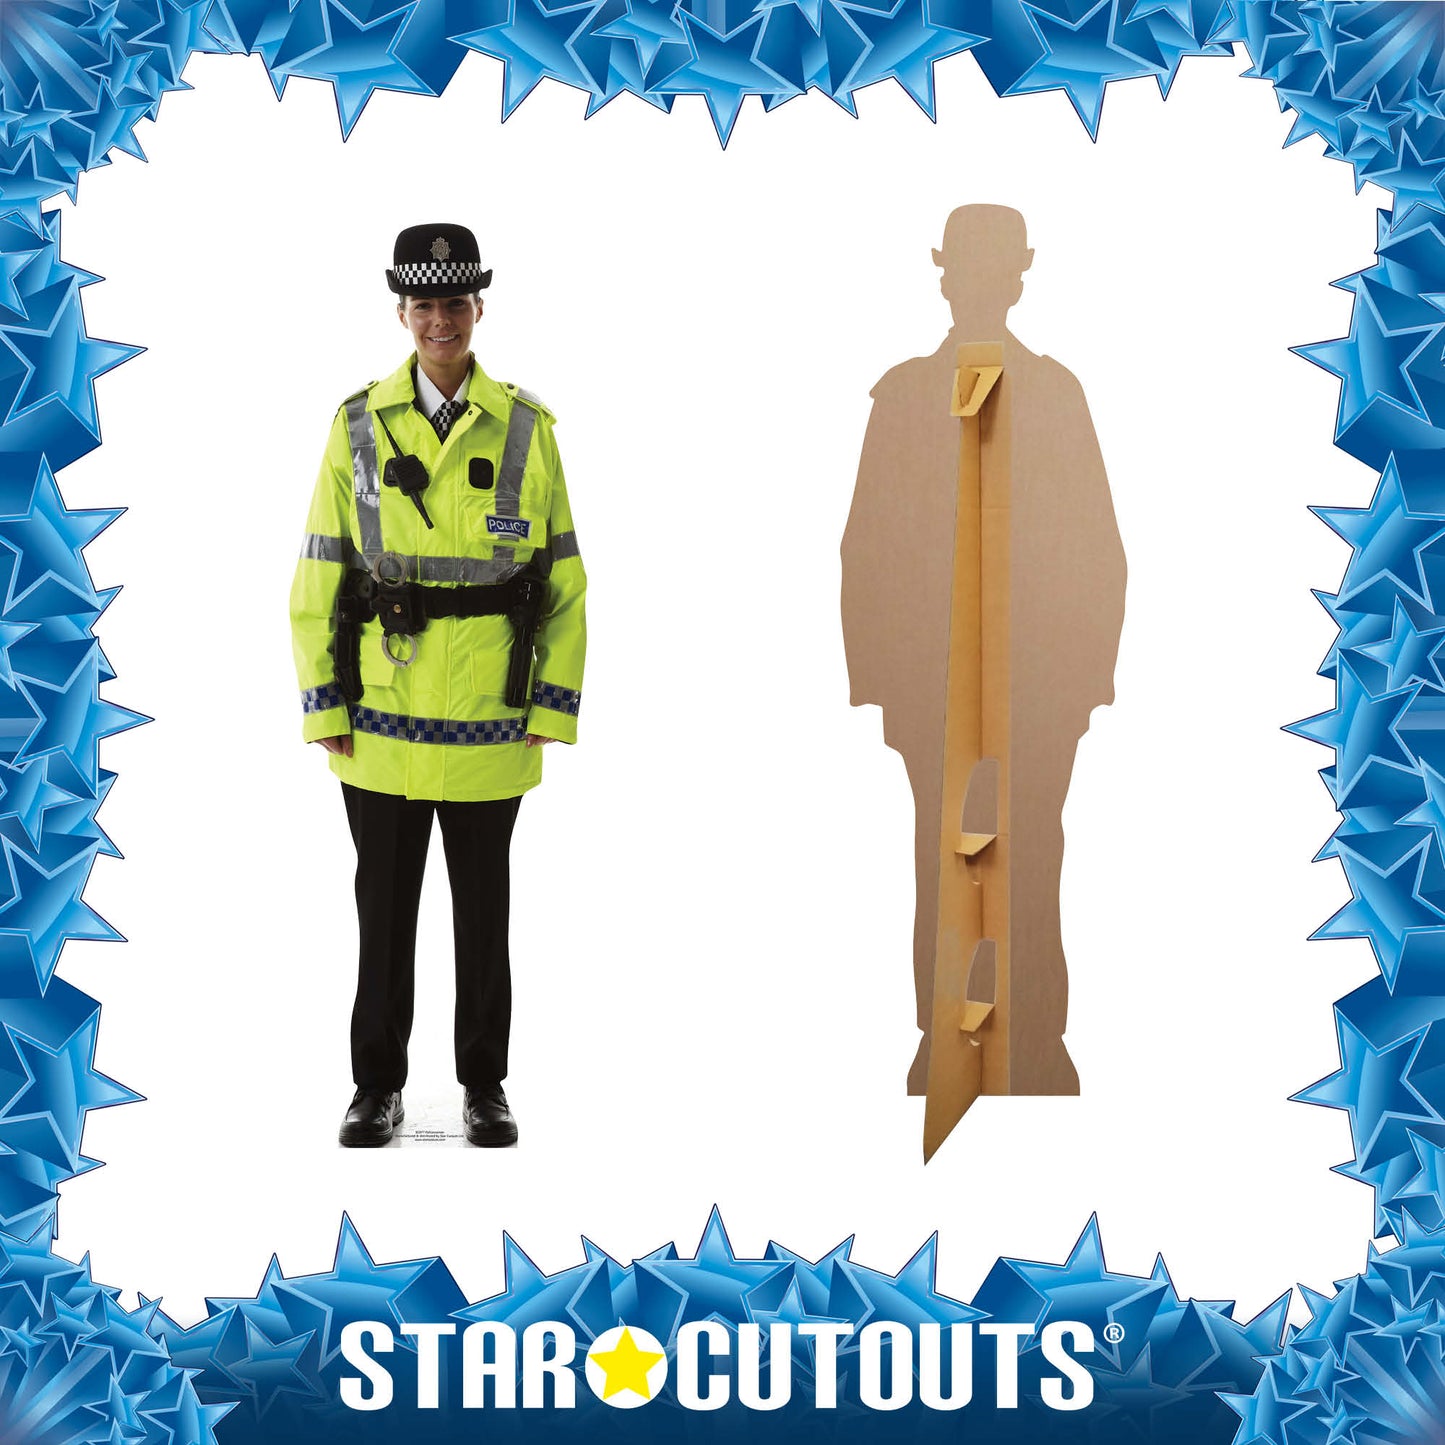 SC077 Policewoman Cardboard Cut Out Height 165cm